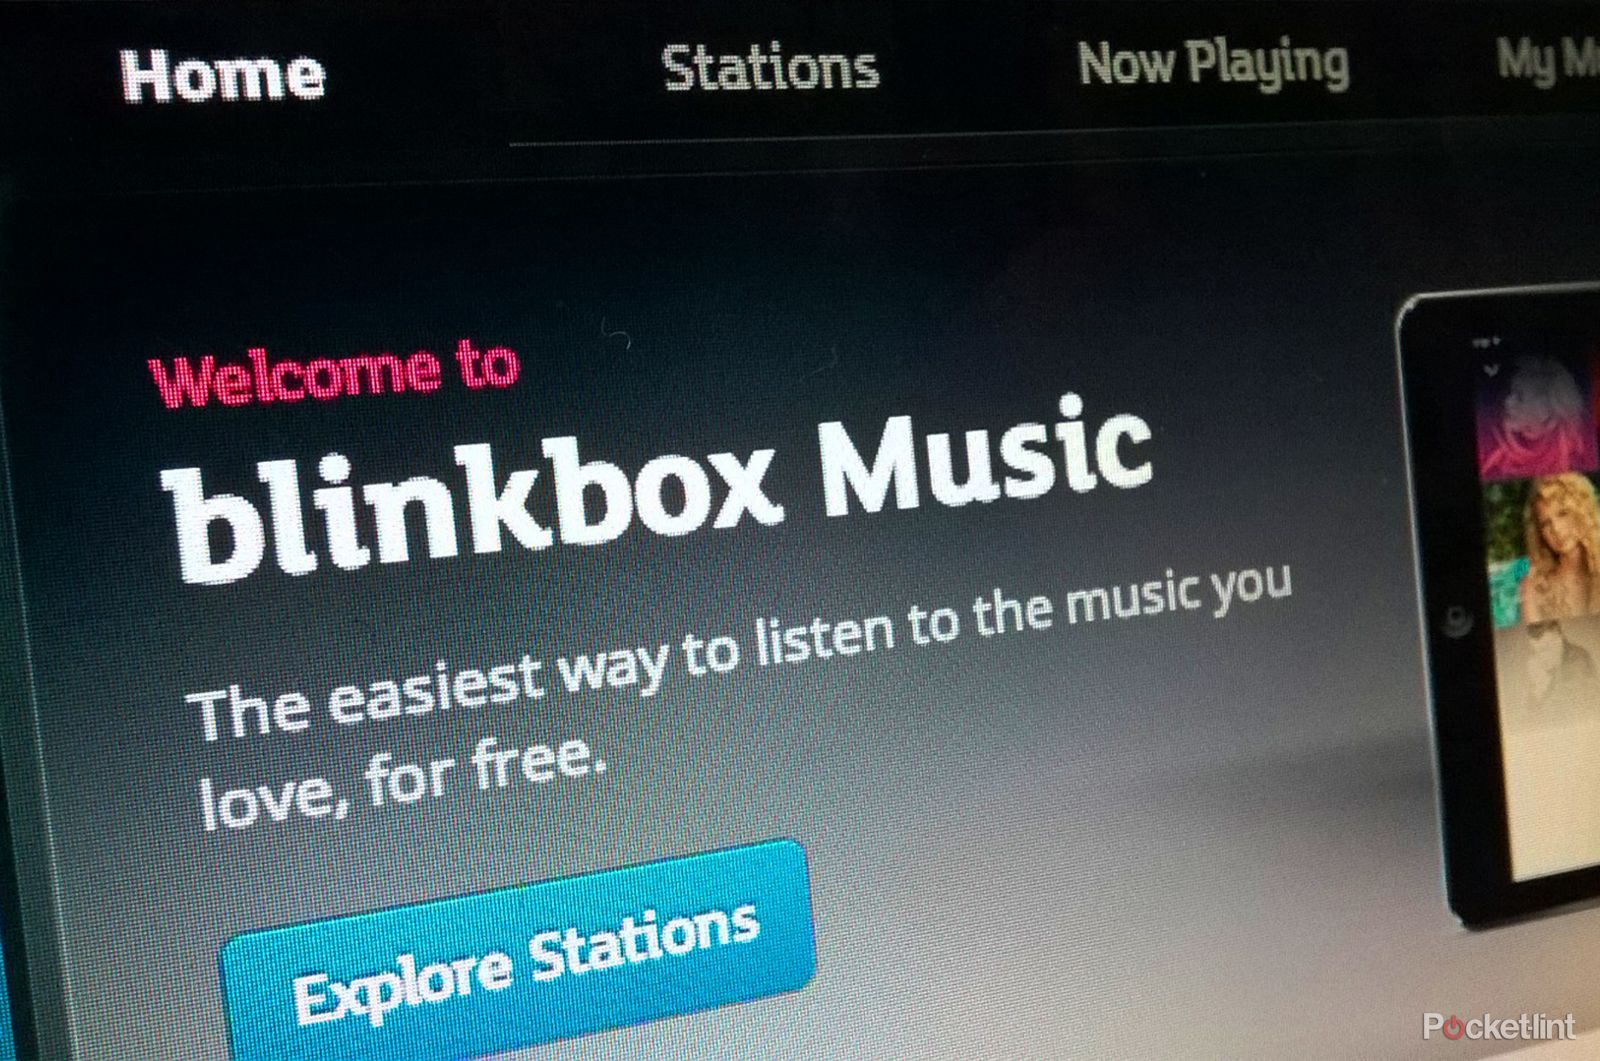 tesco sells blinkbox music to australian music service guvera image 1